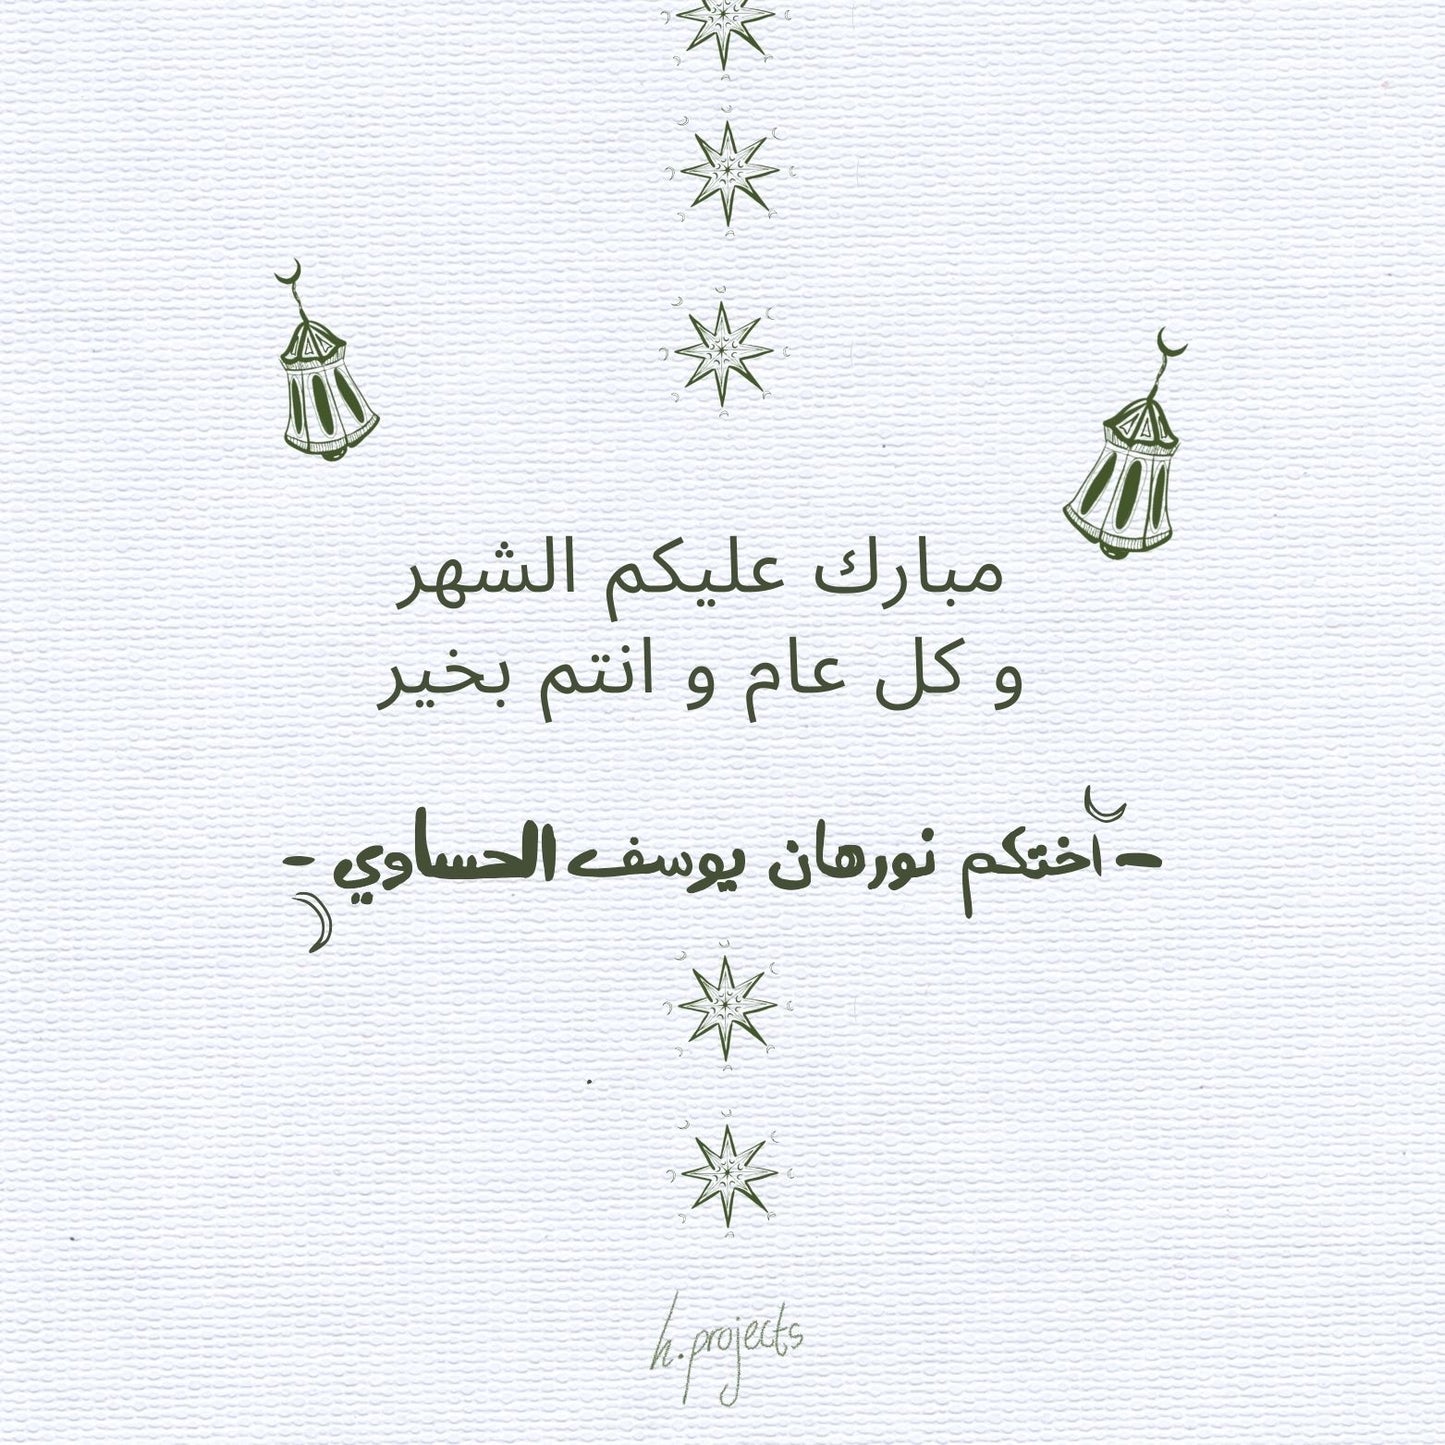 Ramadan Personal Greeting Cards